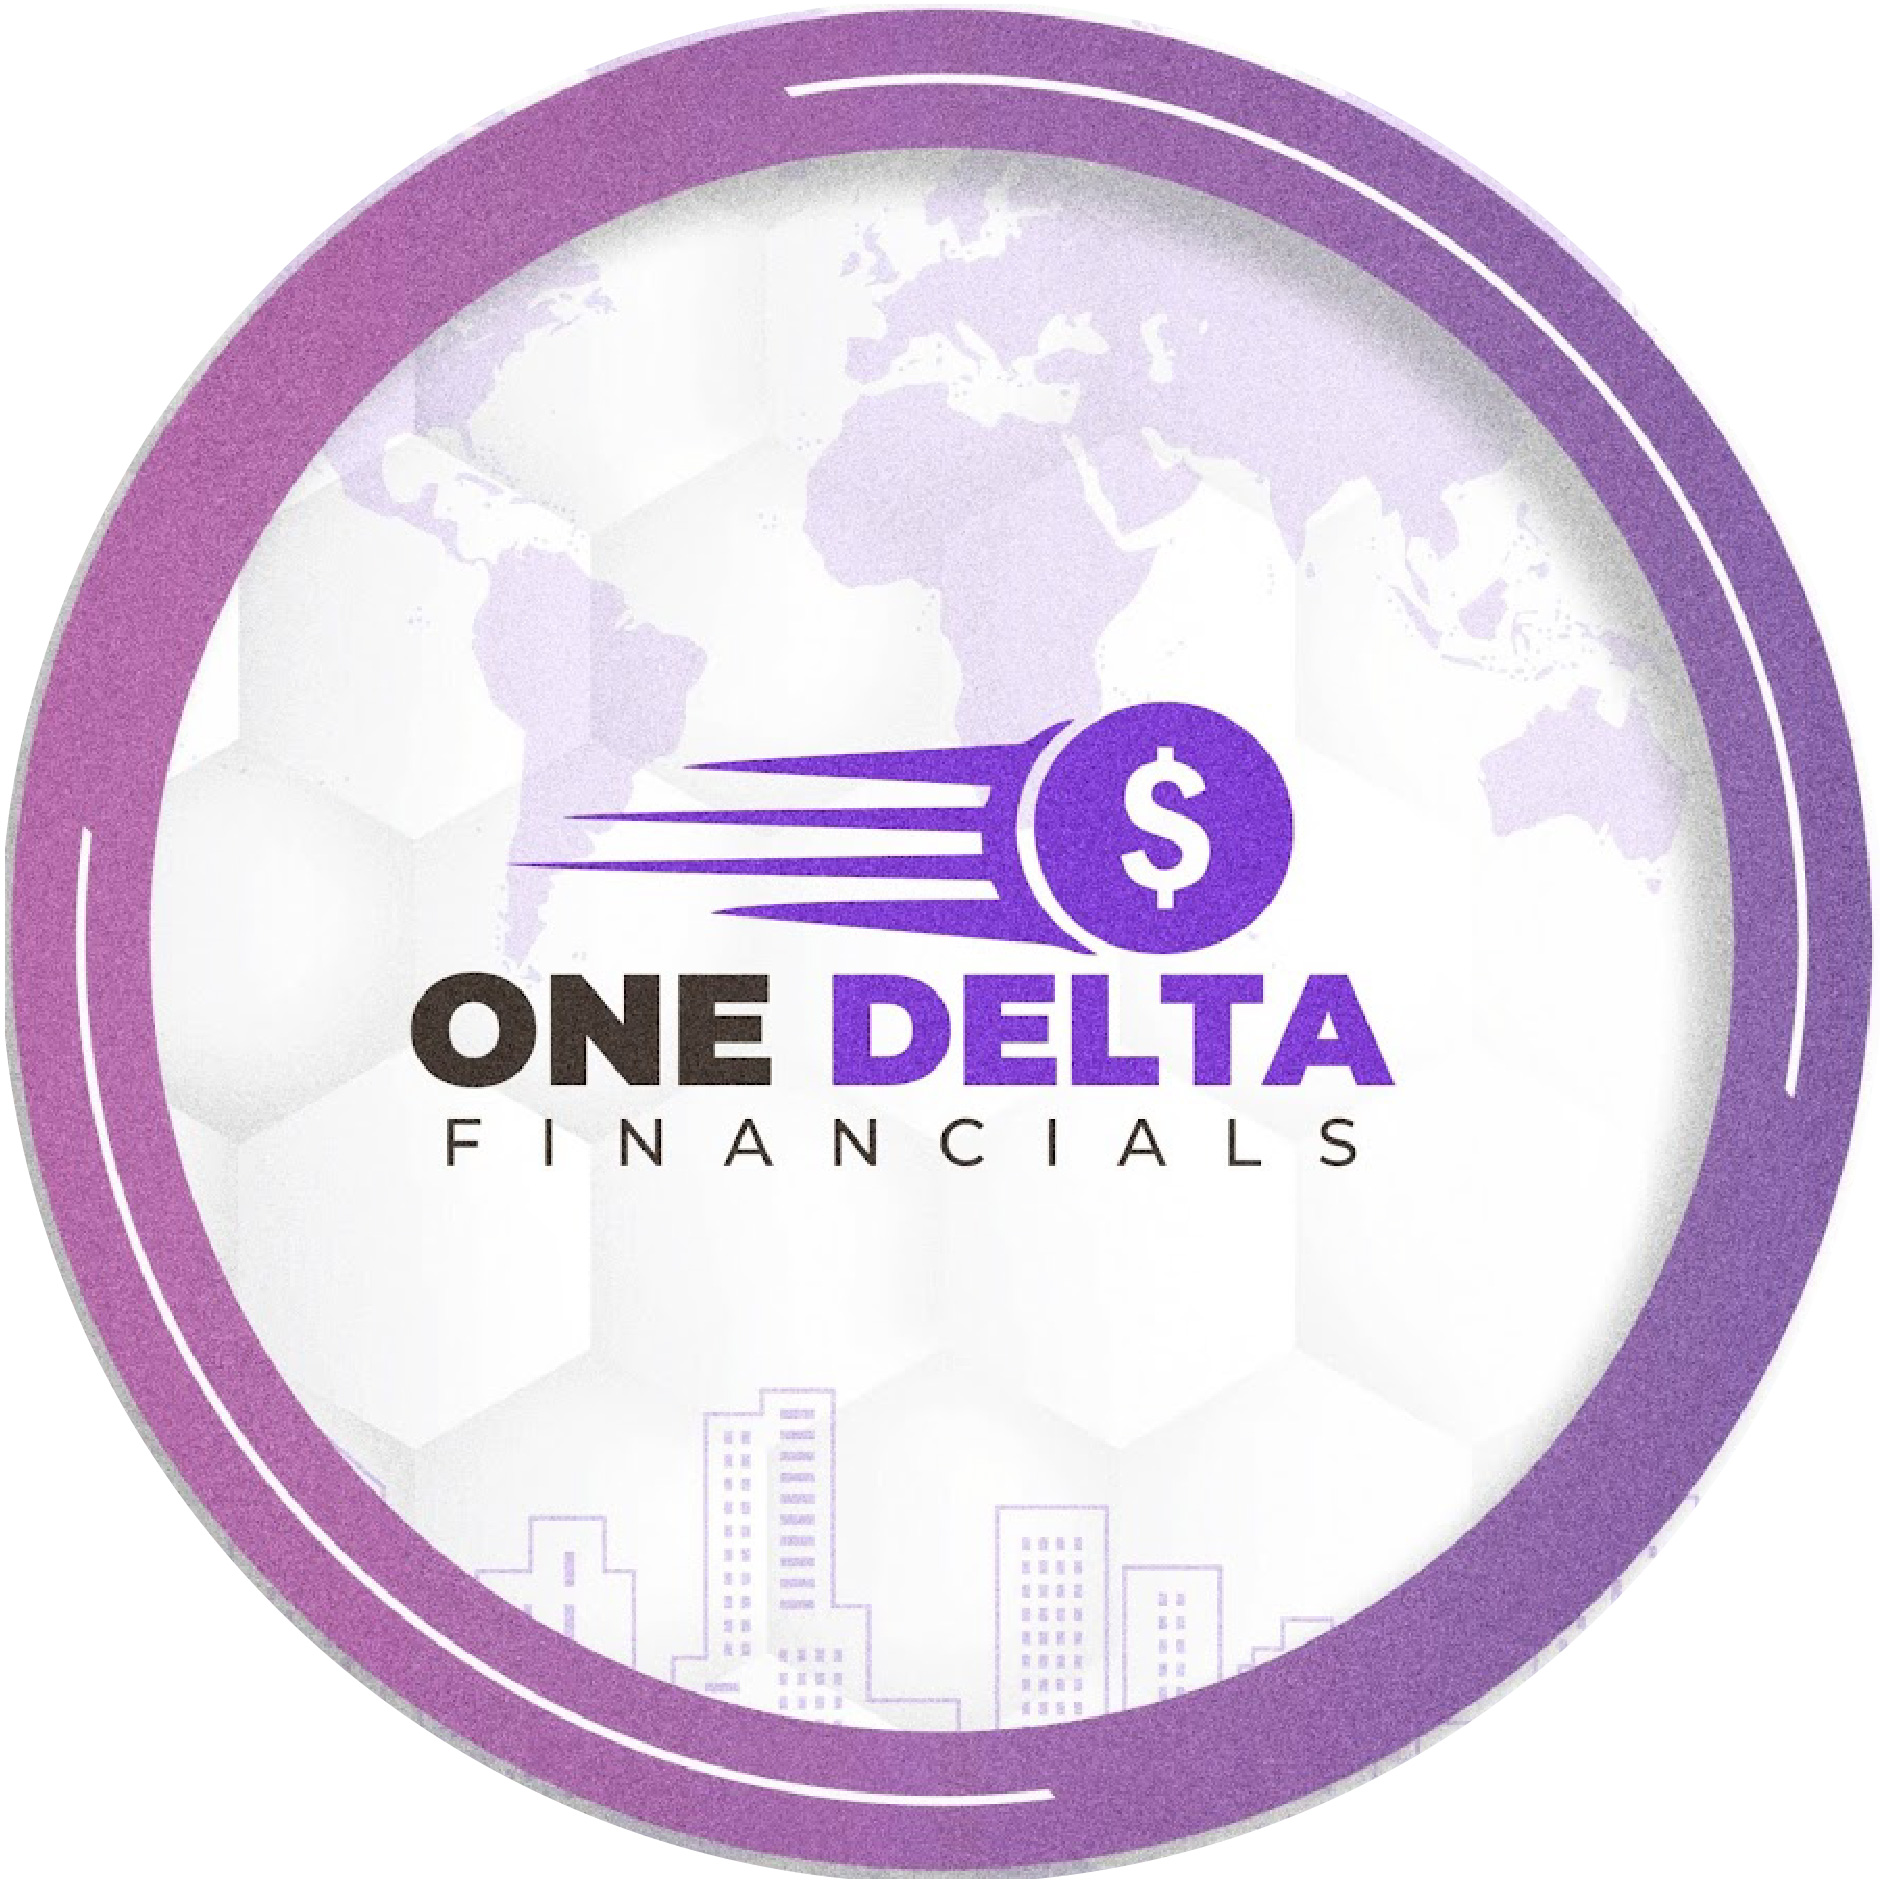 One Delta Financials